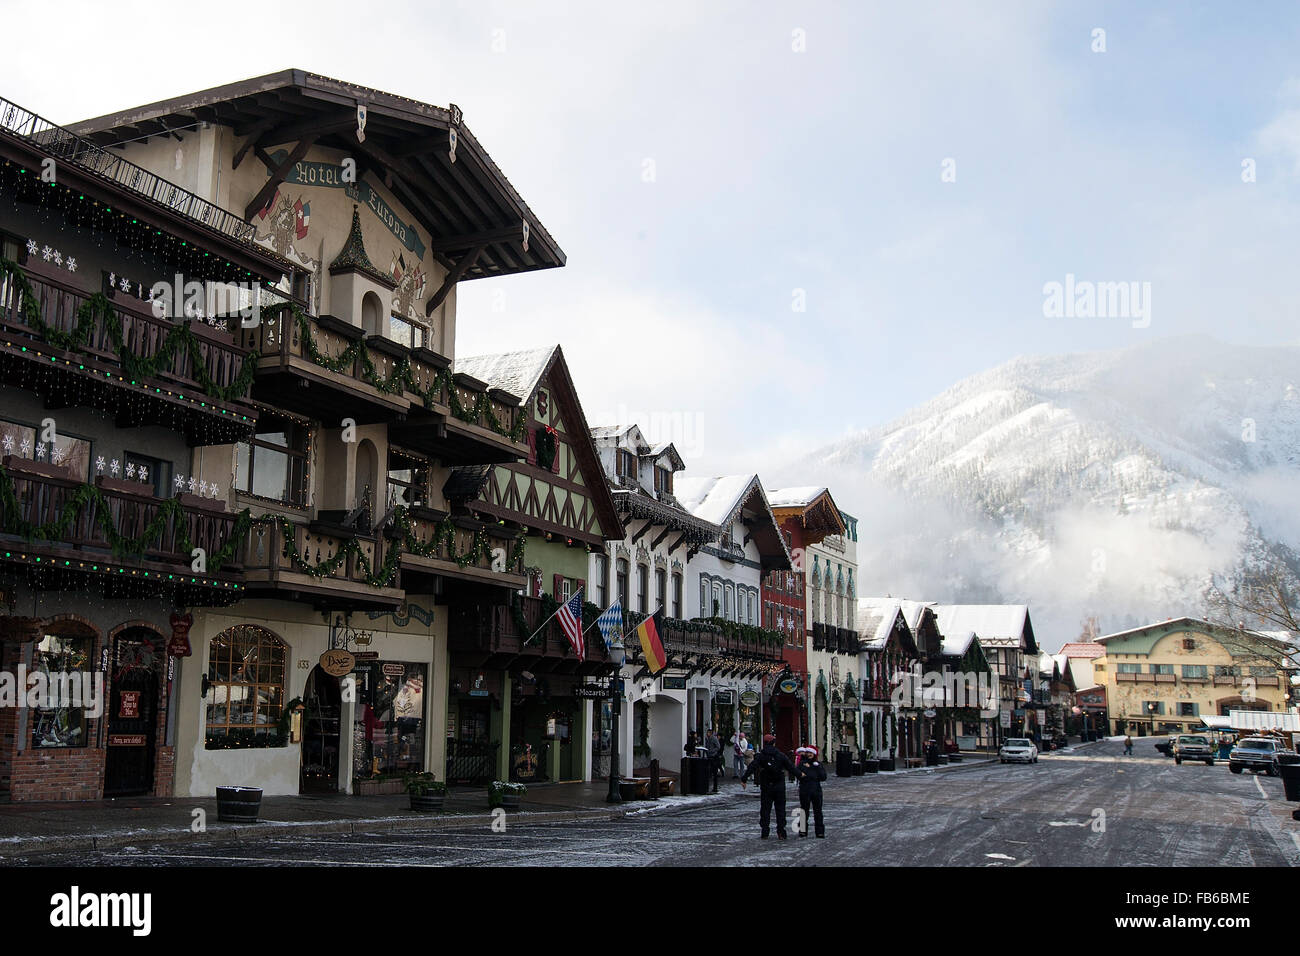 Negozi e coperta di neve montagna, downtown, Leavenworth, Washington, Stati Uniti d'America Foto Stock